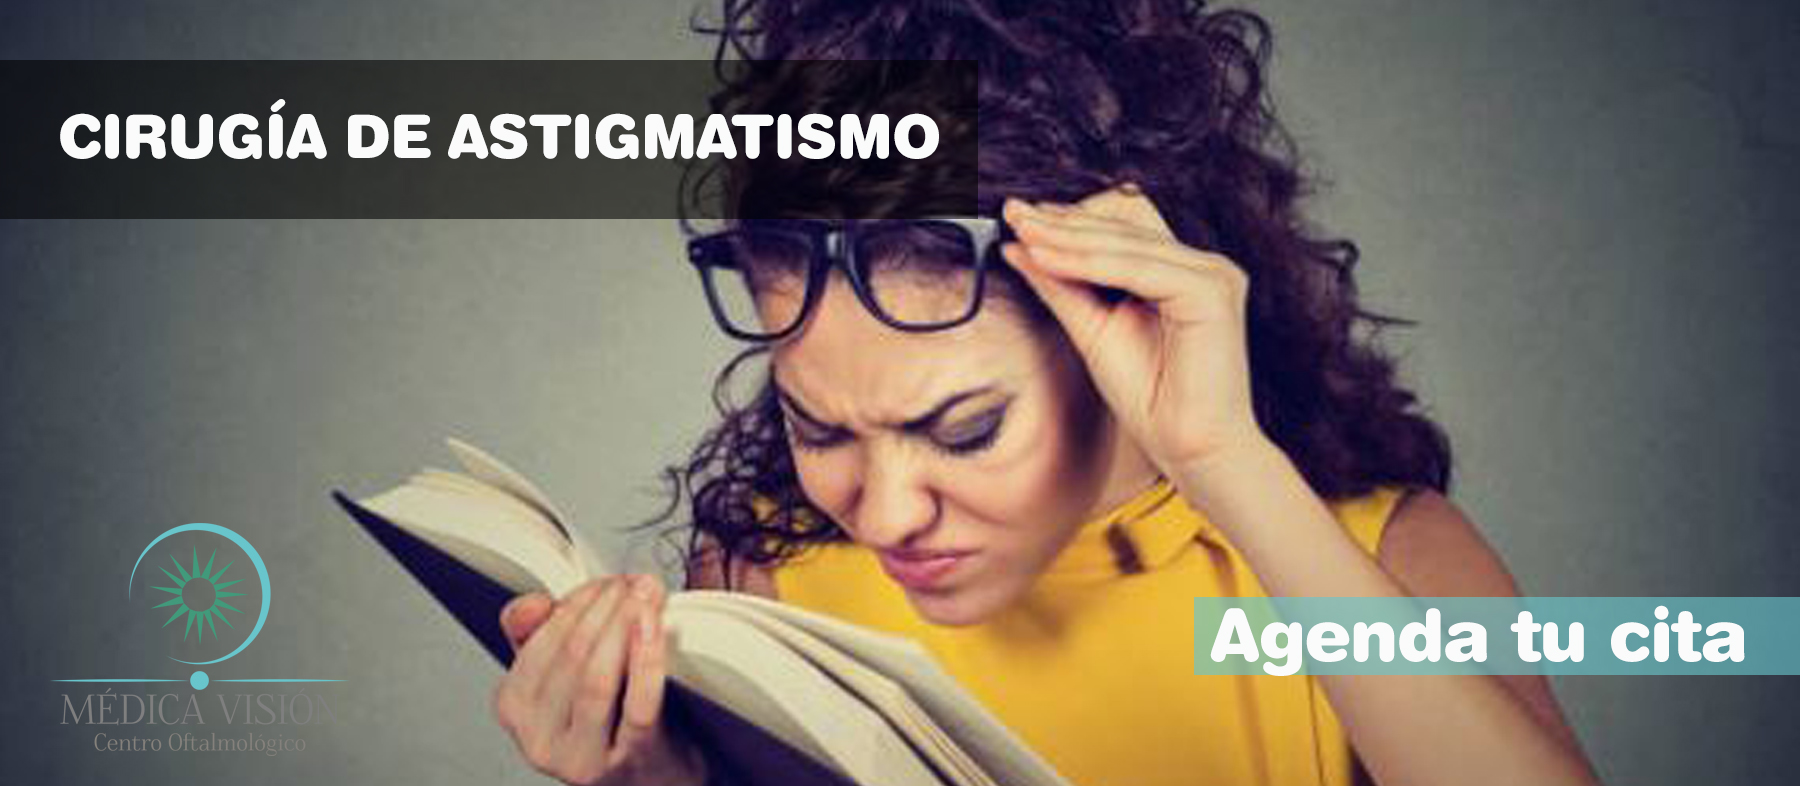 Cirugia de astigmatismo 